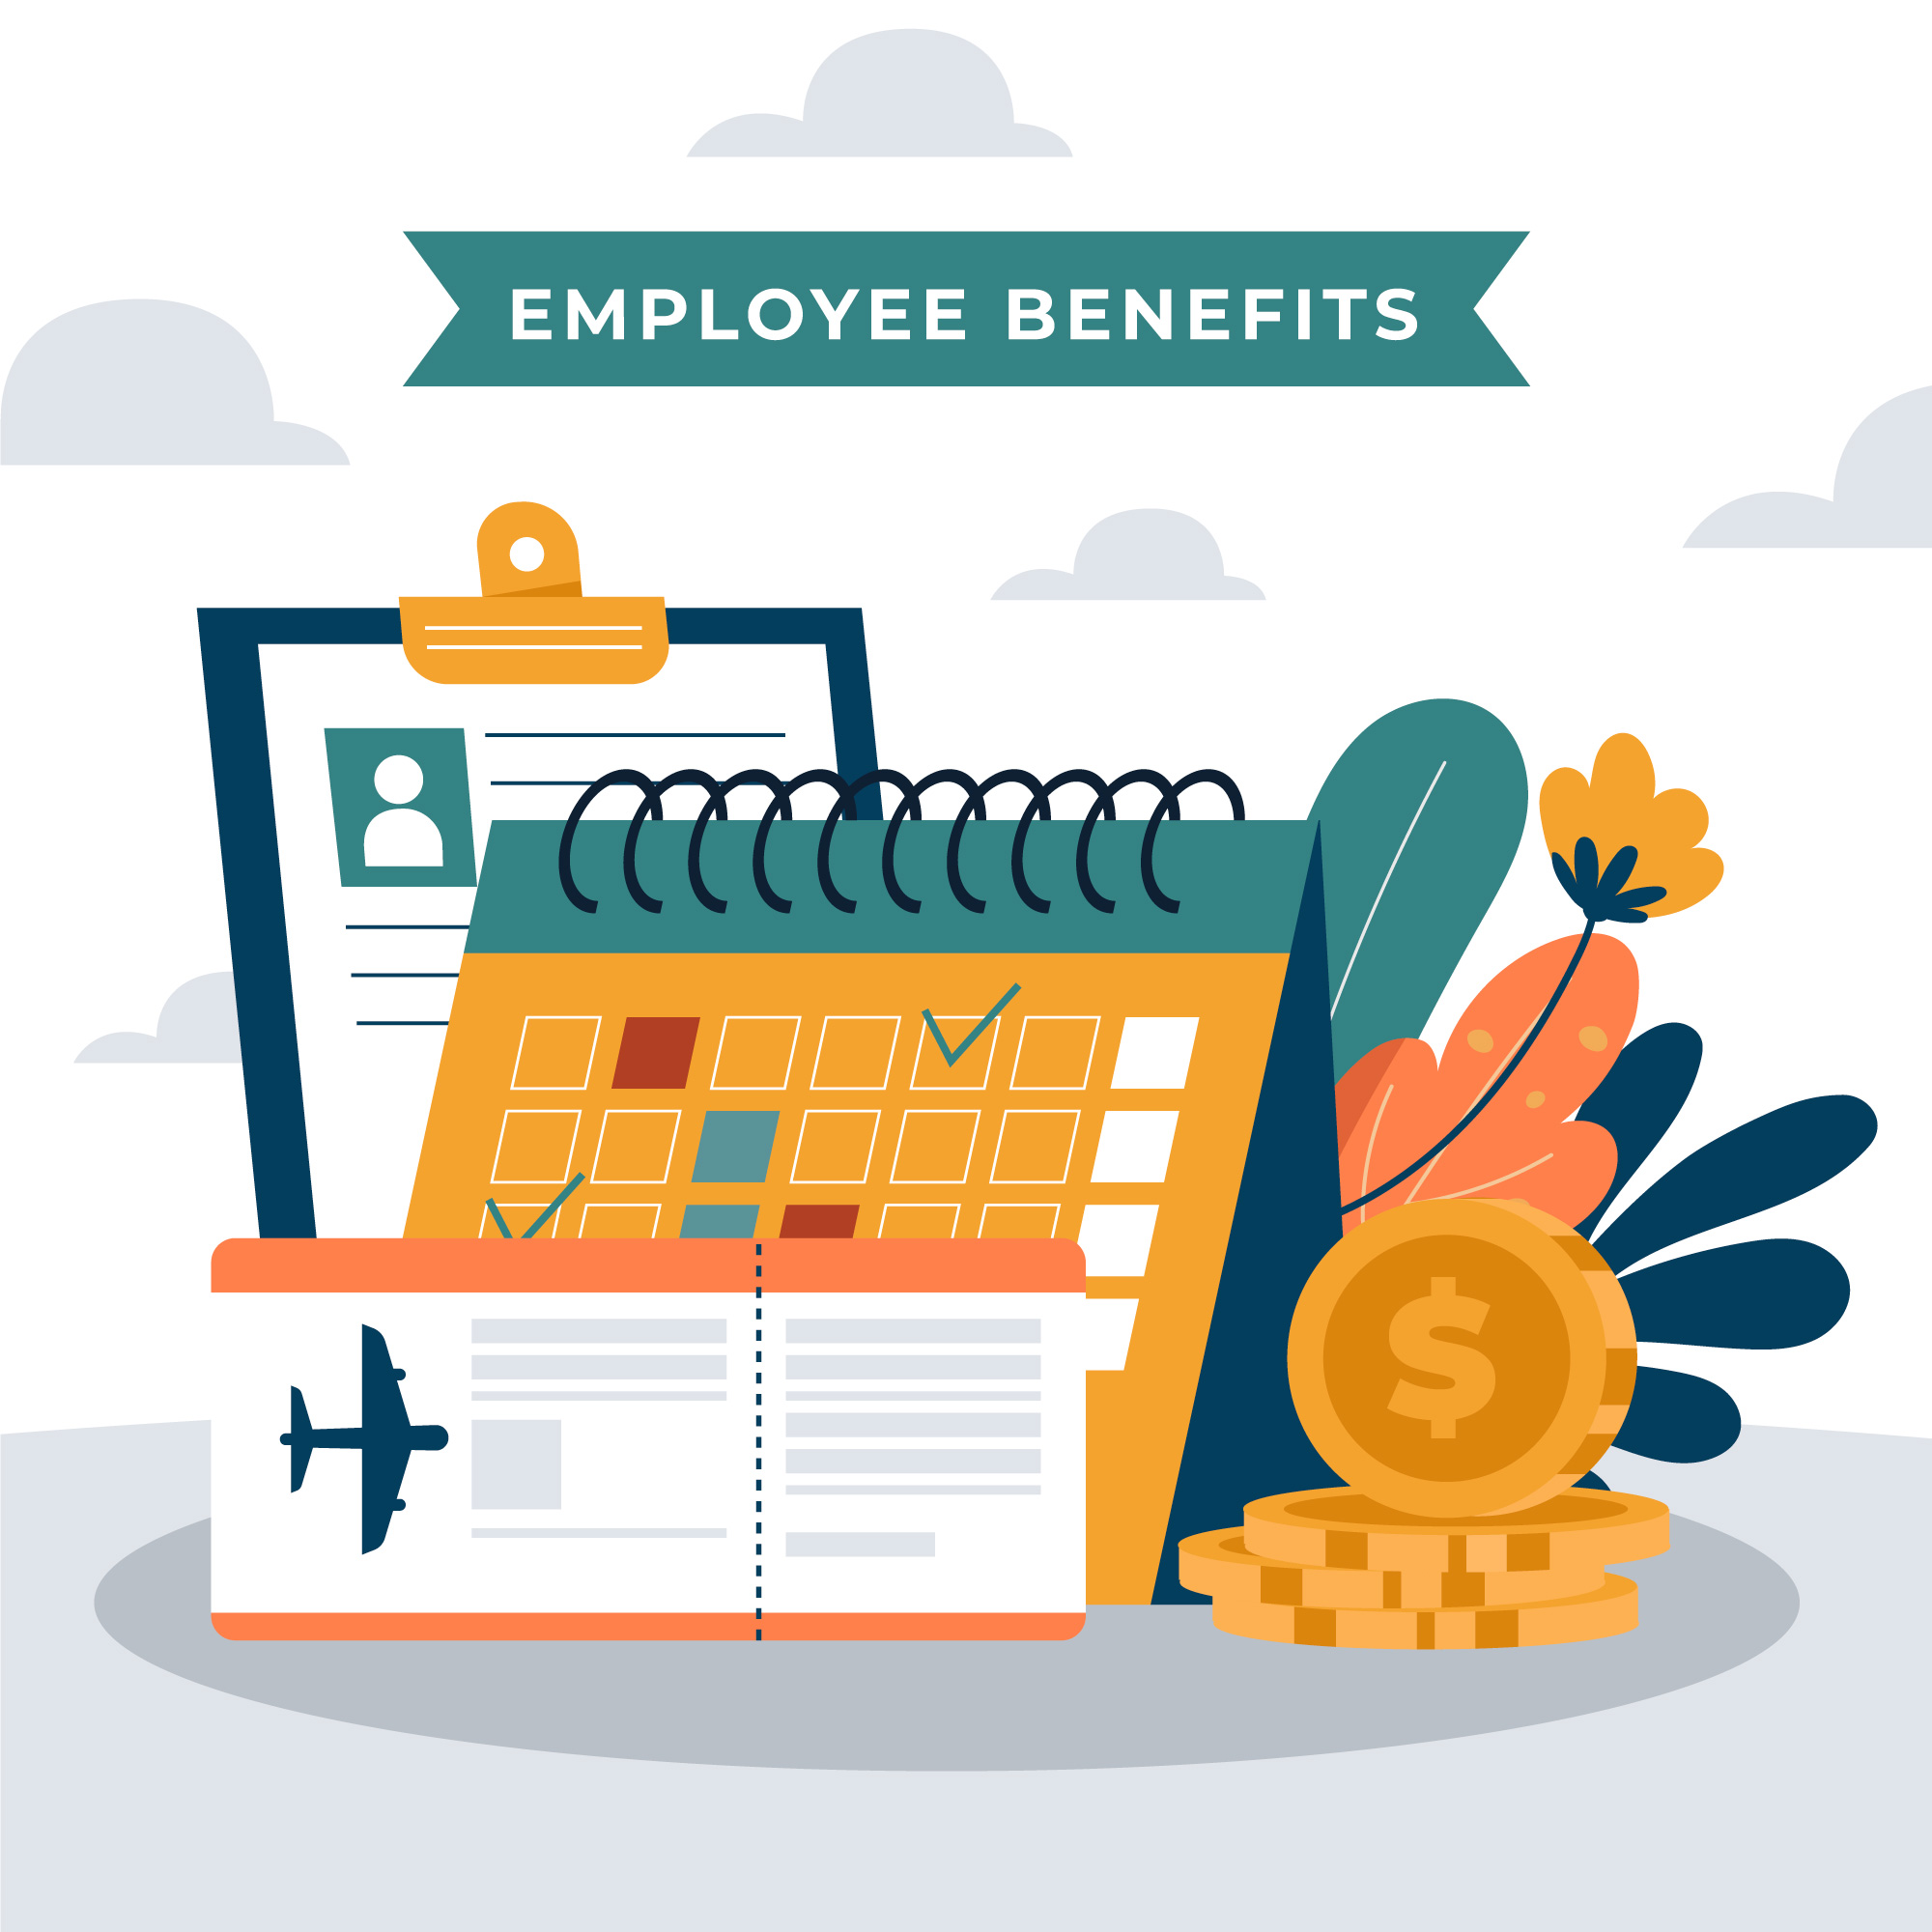 Employee benefits in organisation 